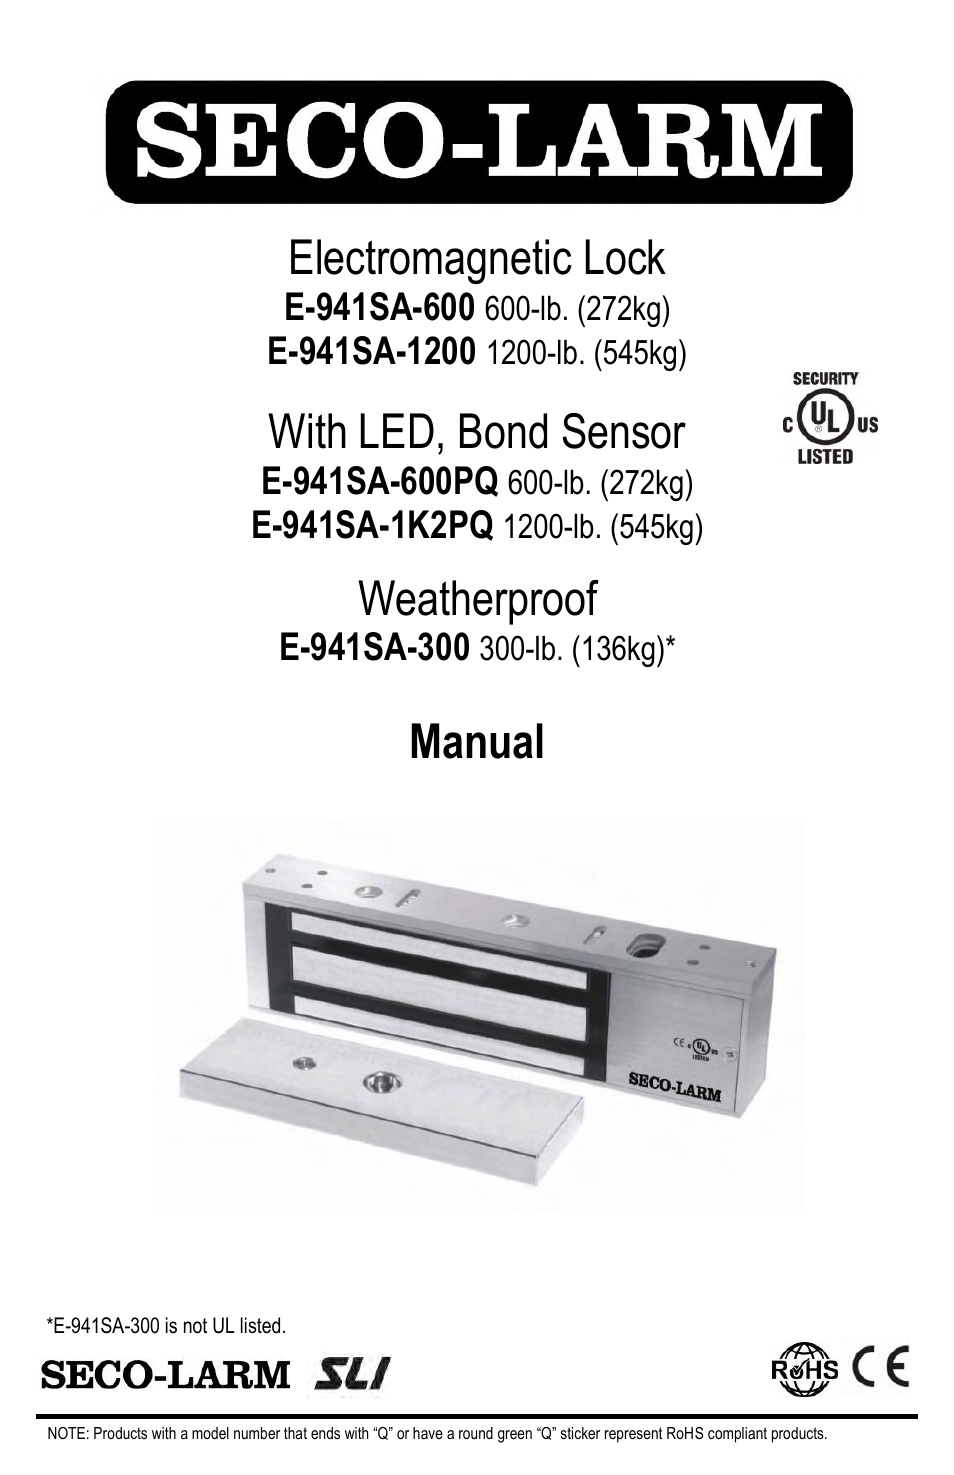 Electromagnetic Lock E-941SA-600